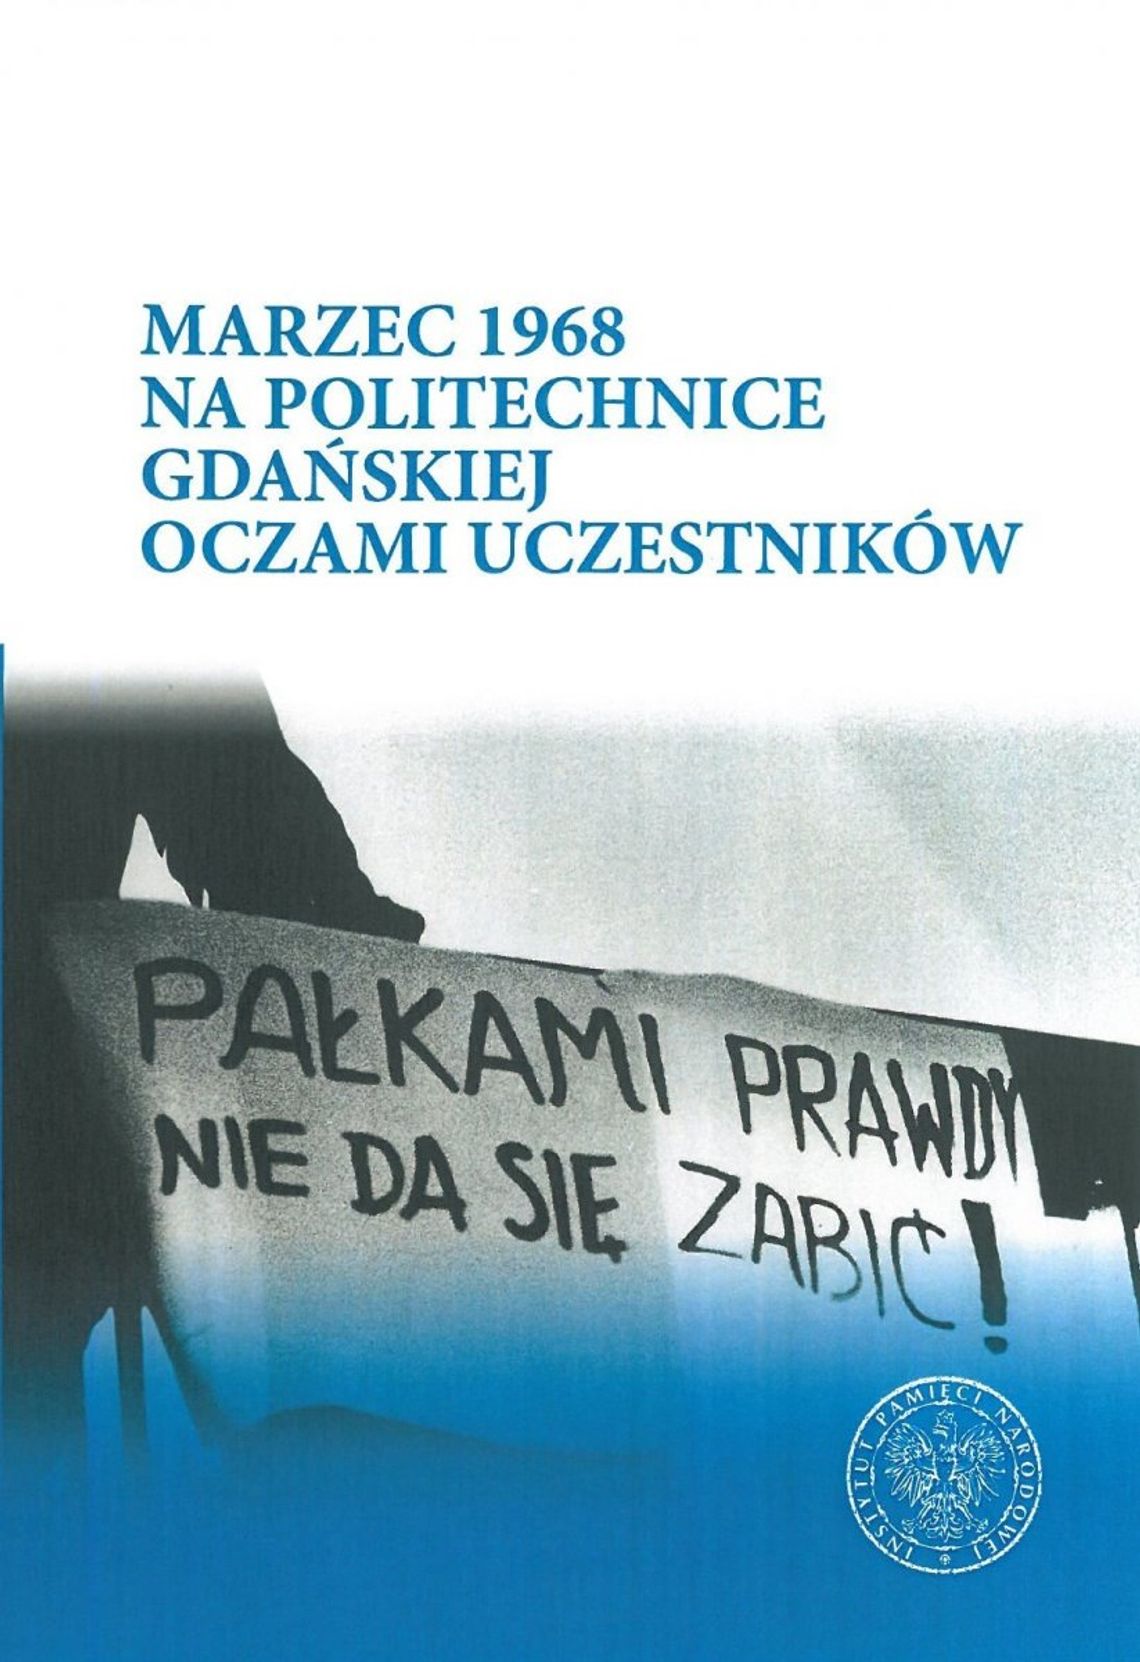 Promocja książek na temat Marca’68 na Politechnice Gdańskiej